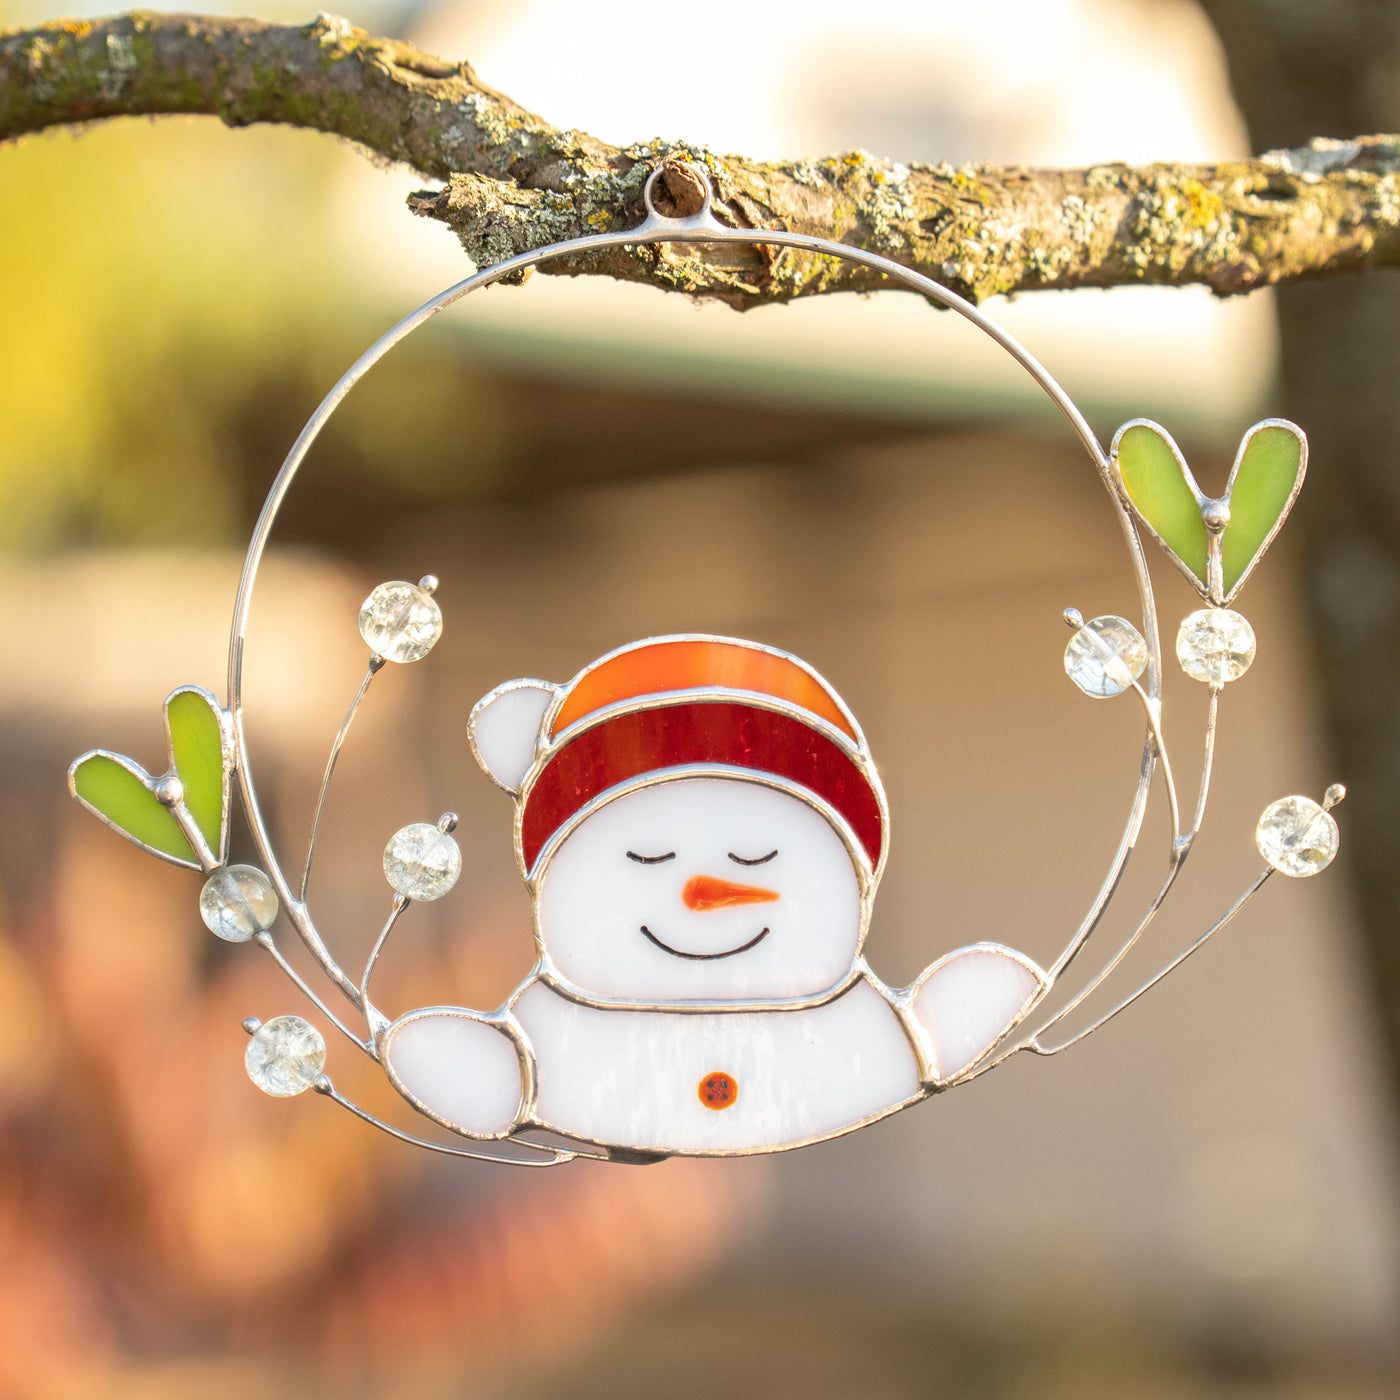 Snowman in mistletoe of stained glass window suncatcher for Christmas